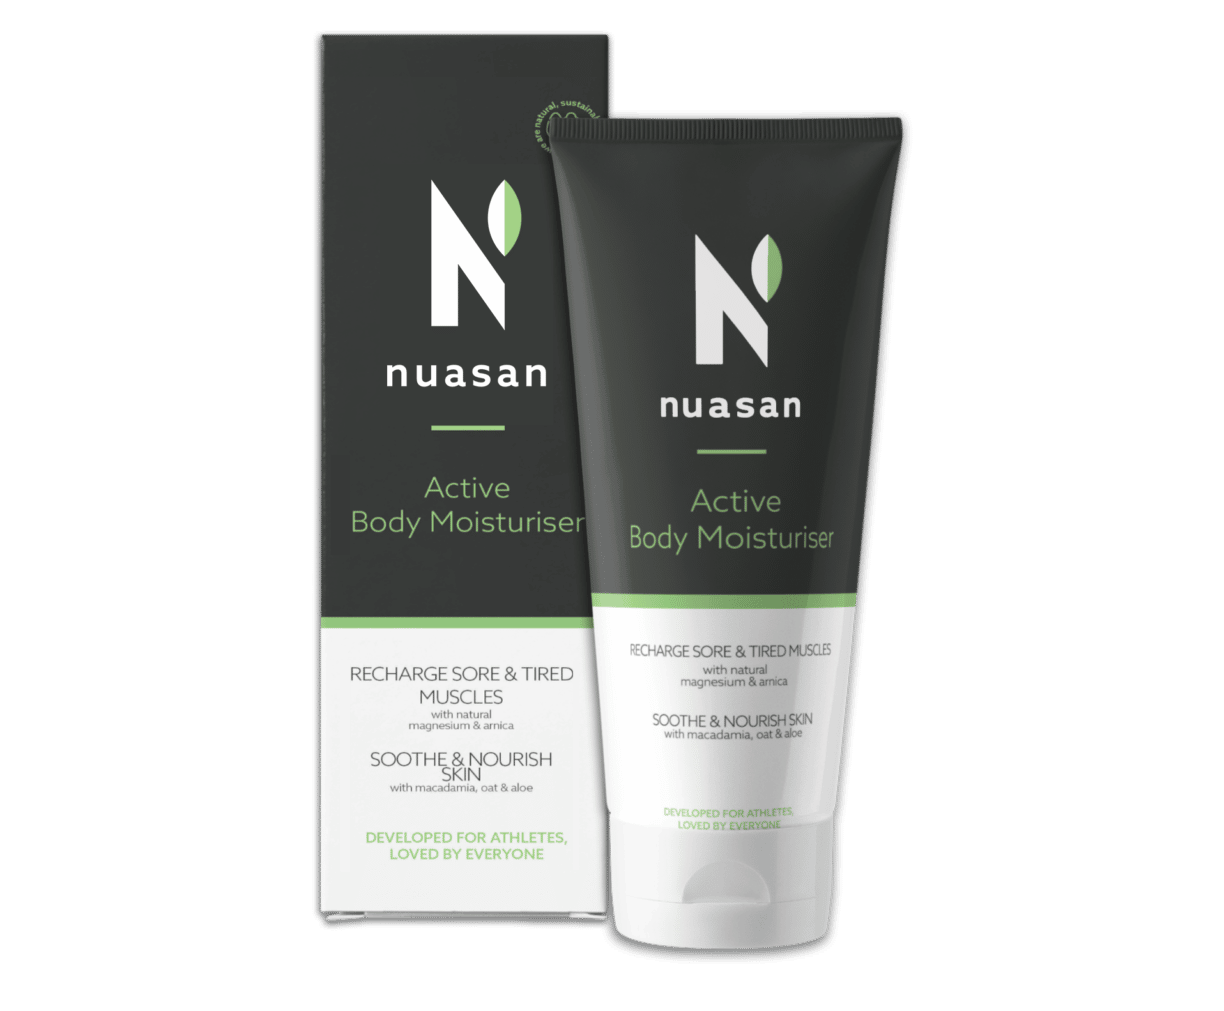 Nuasan active body moisturiser